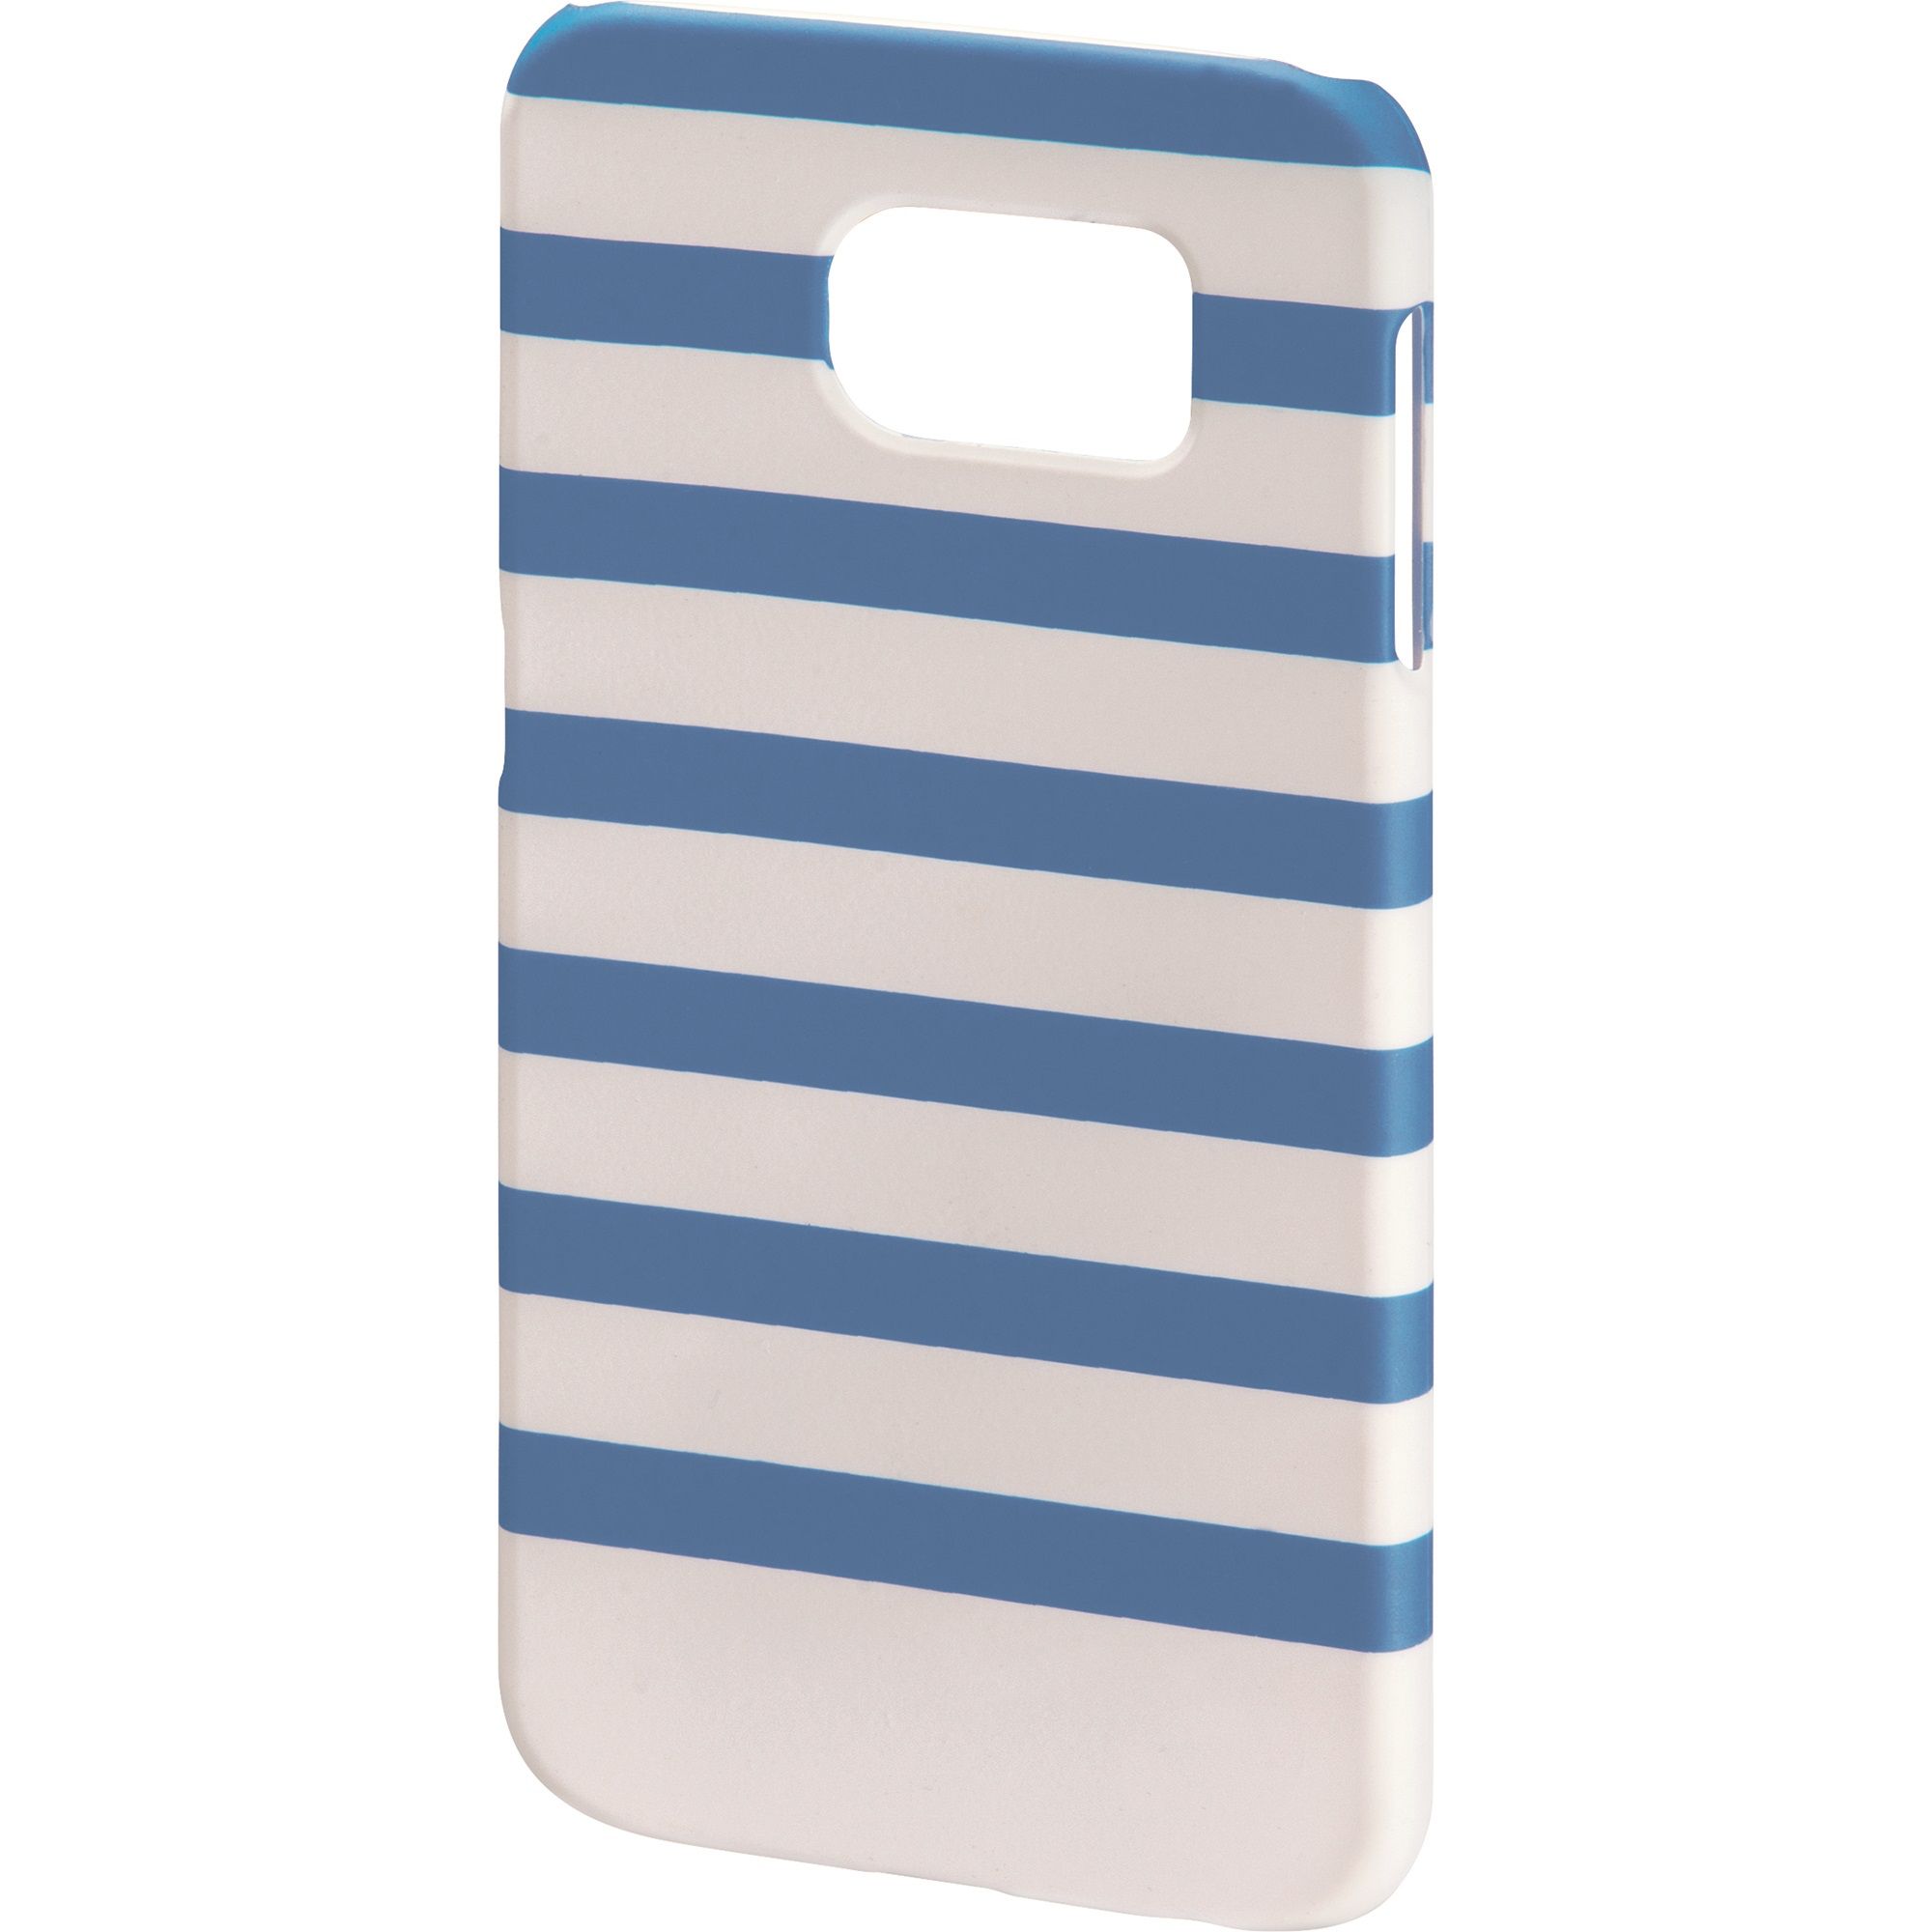  Capac protectie Hama 138241 pentru Samsung Galaxy S6, Albastru 